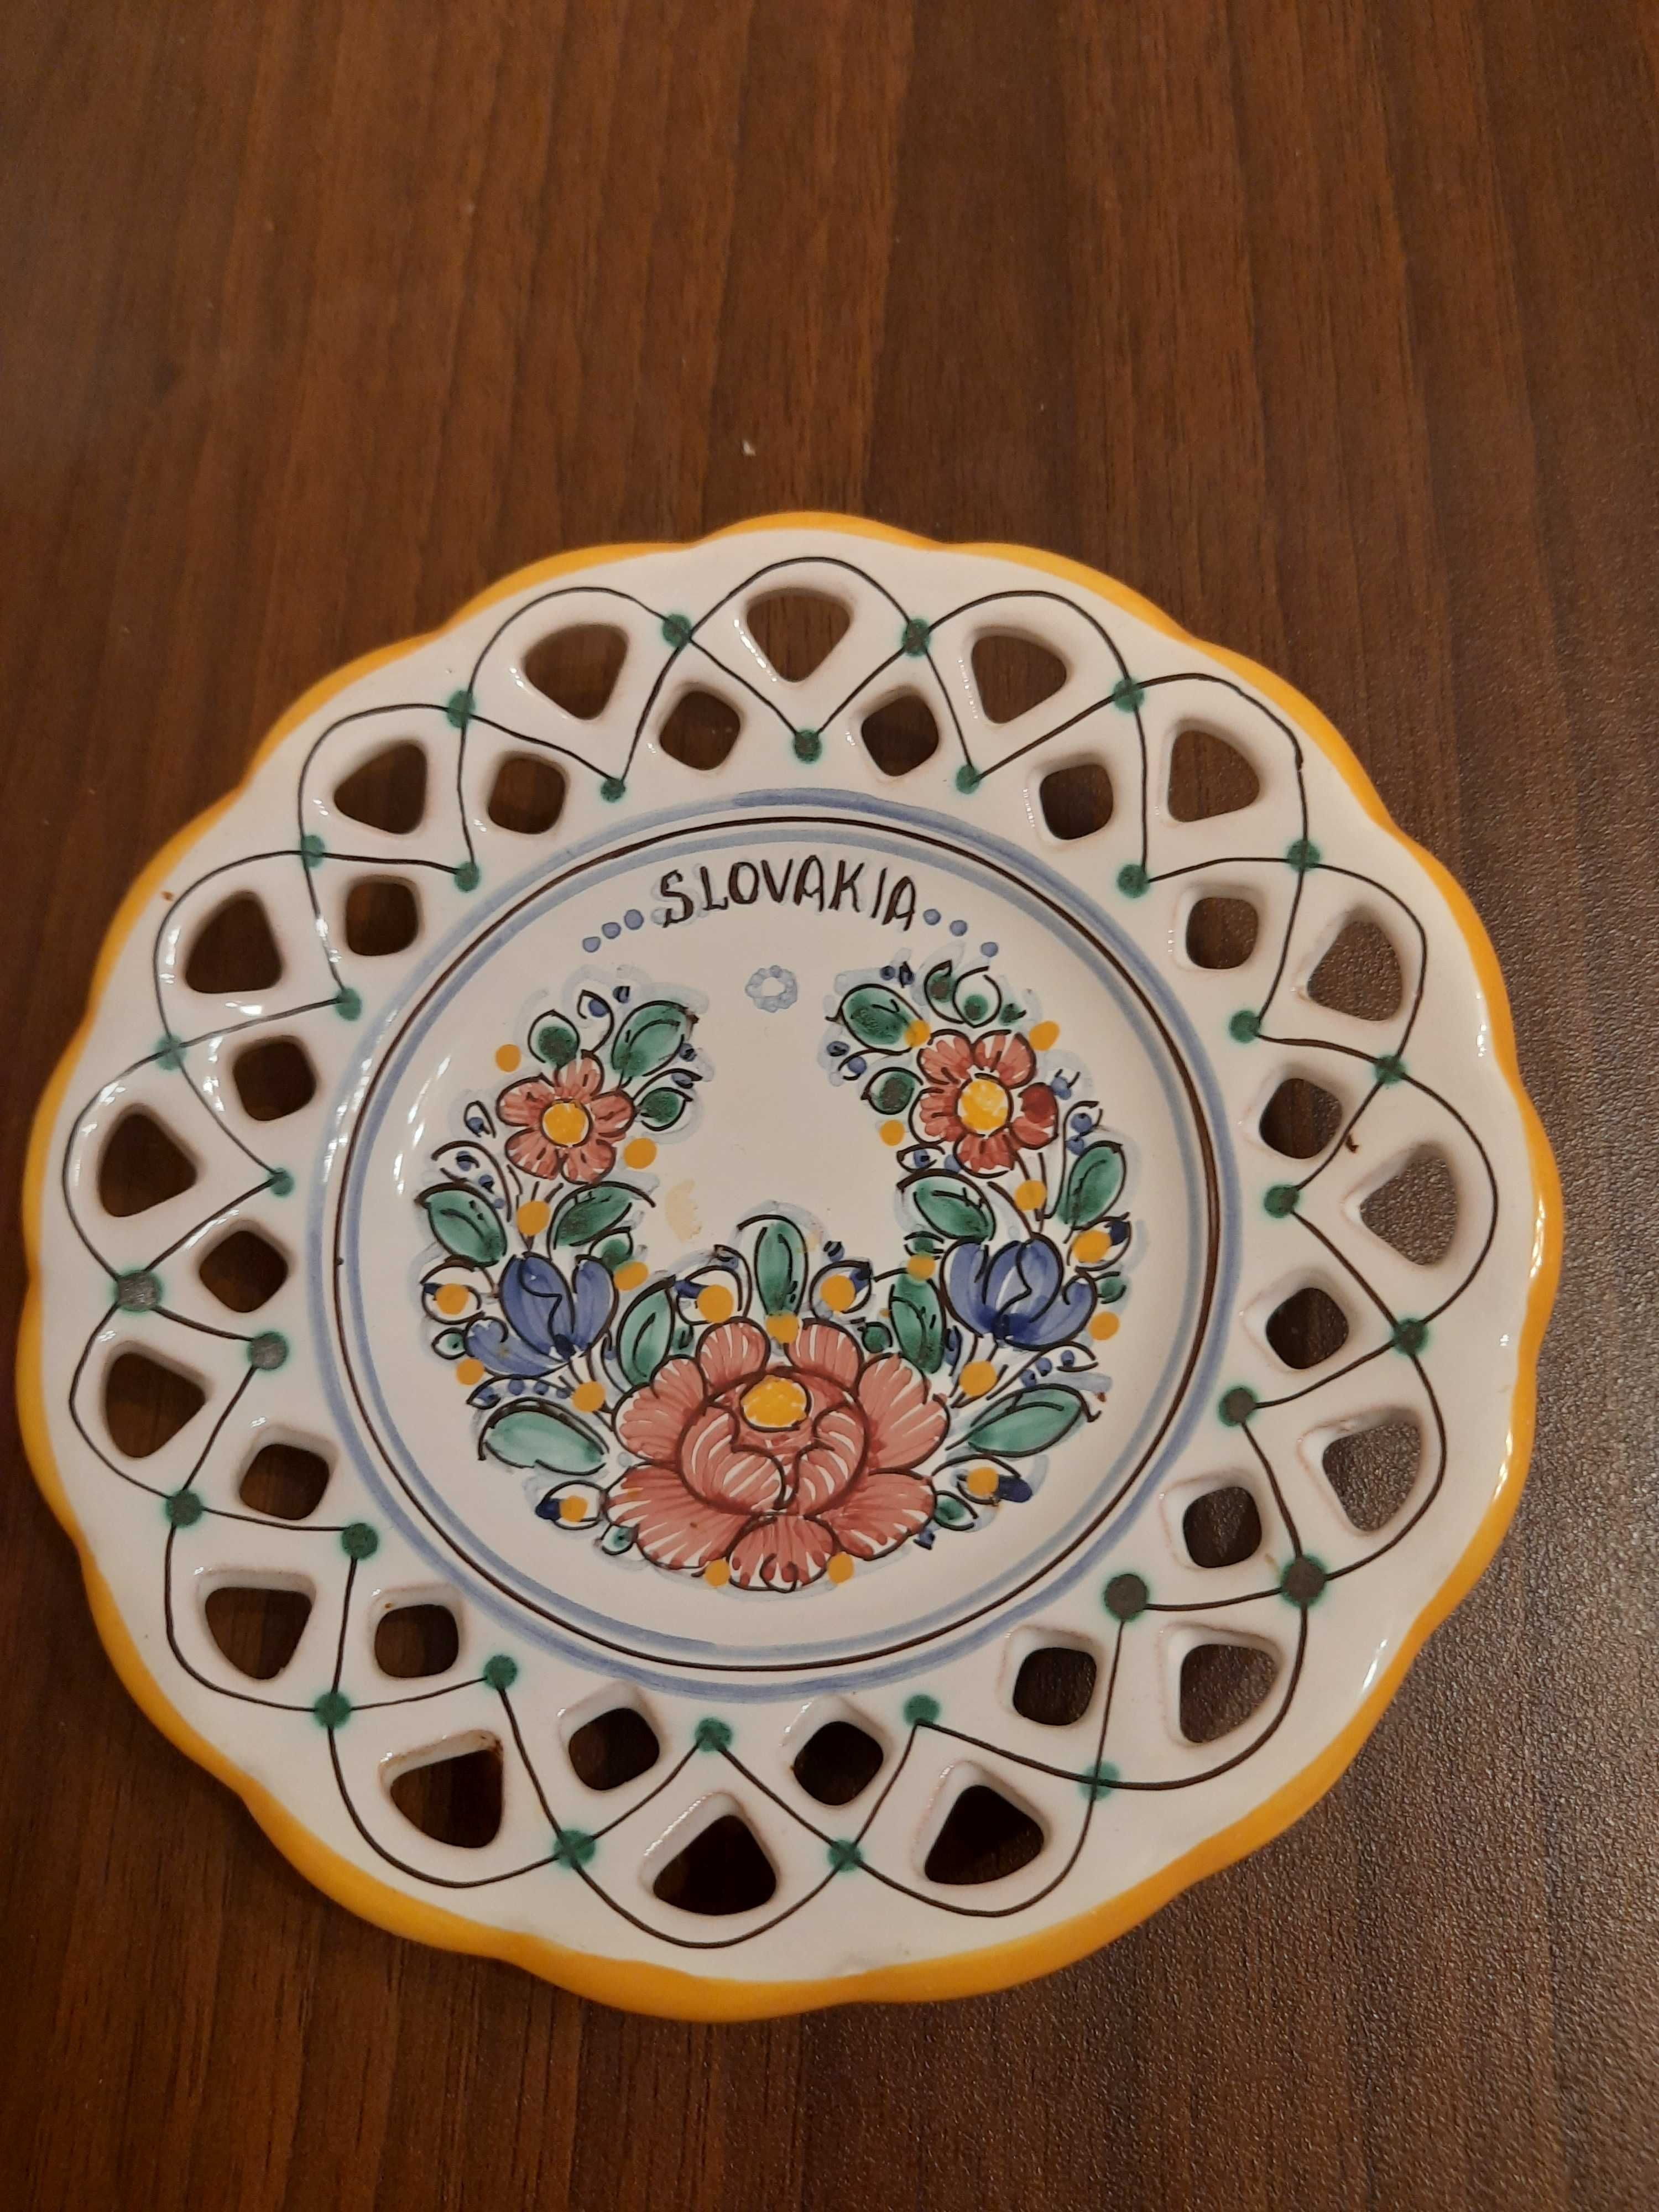 Сувенирные тарелки: Словакия,  , Тунис, Кемер, Одесса,Будапешт